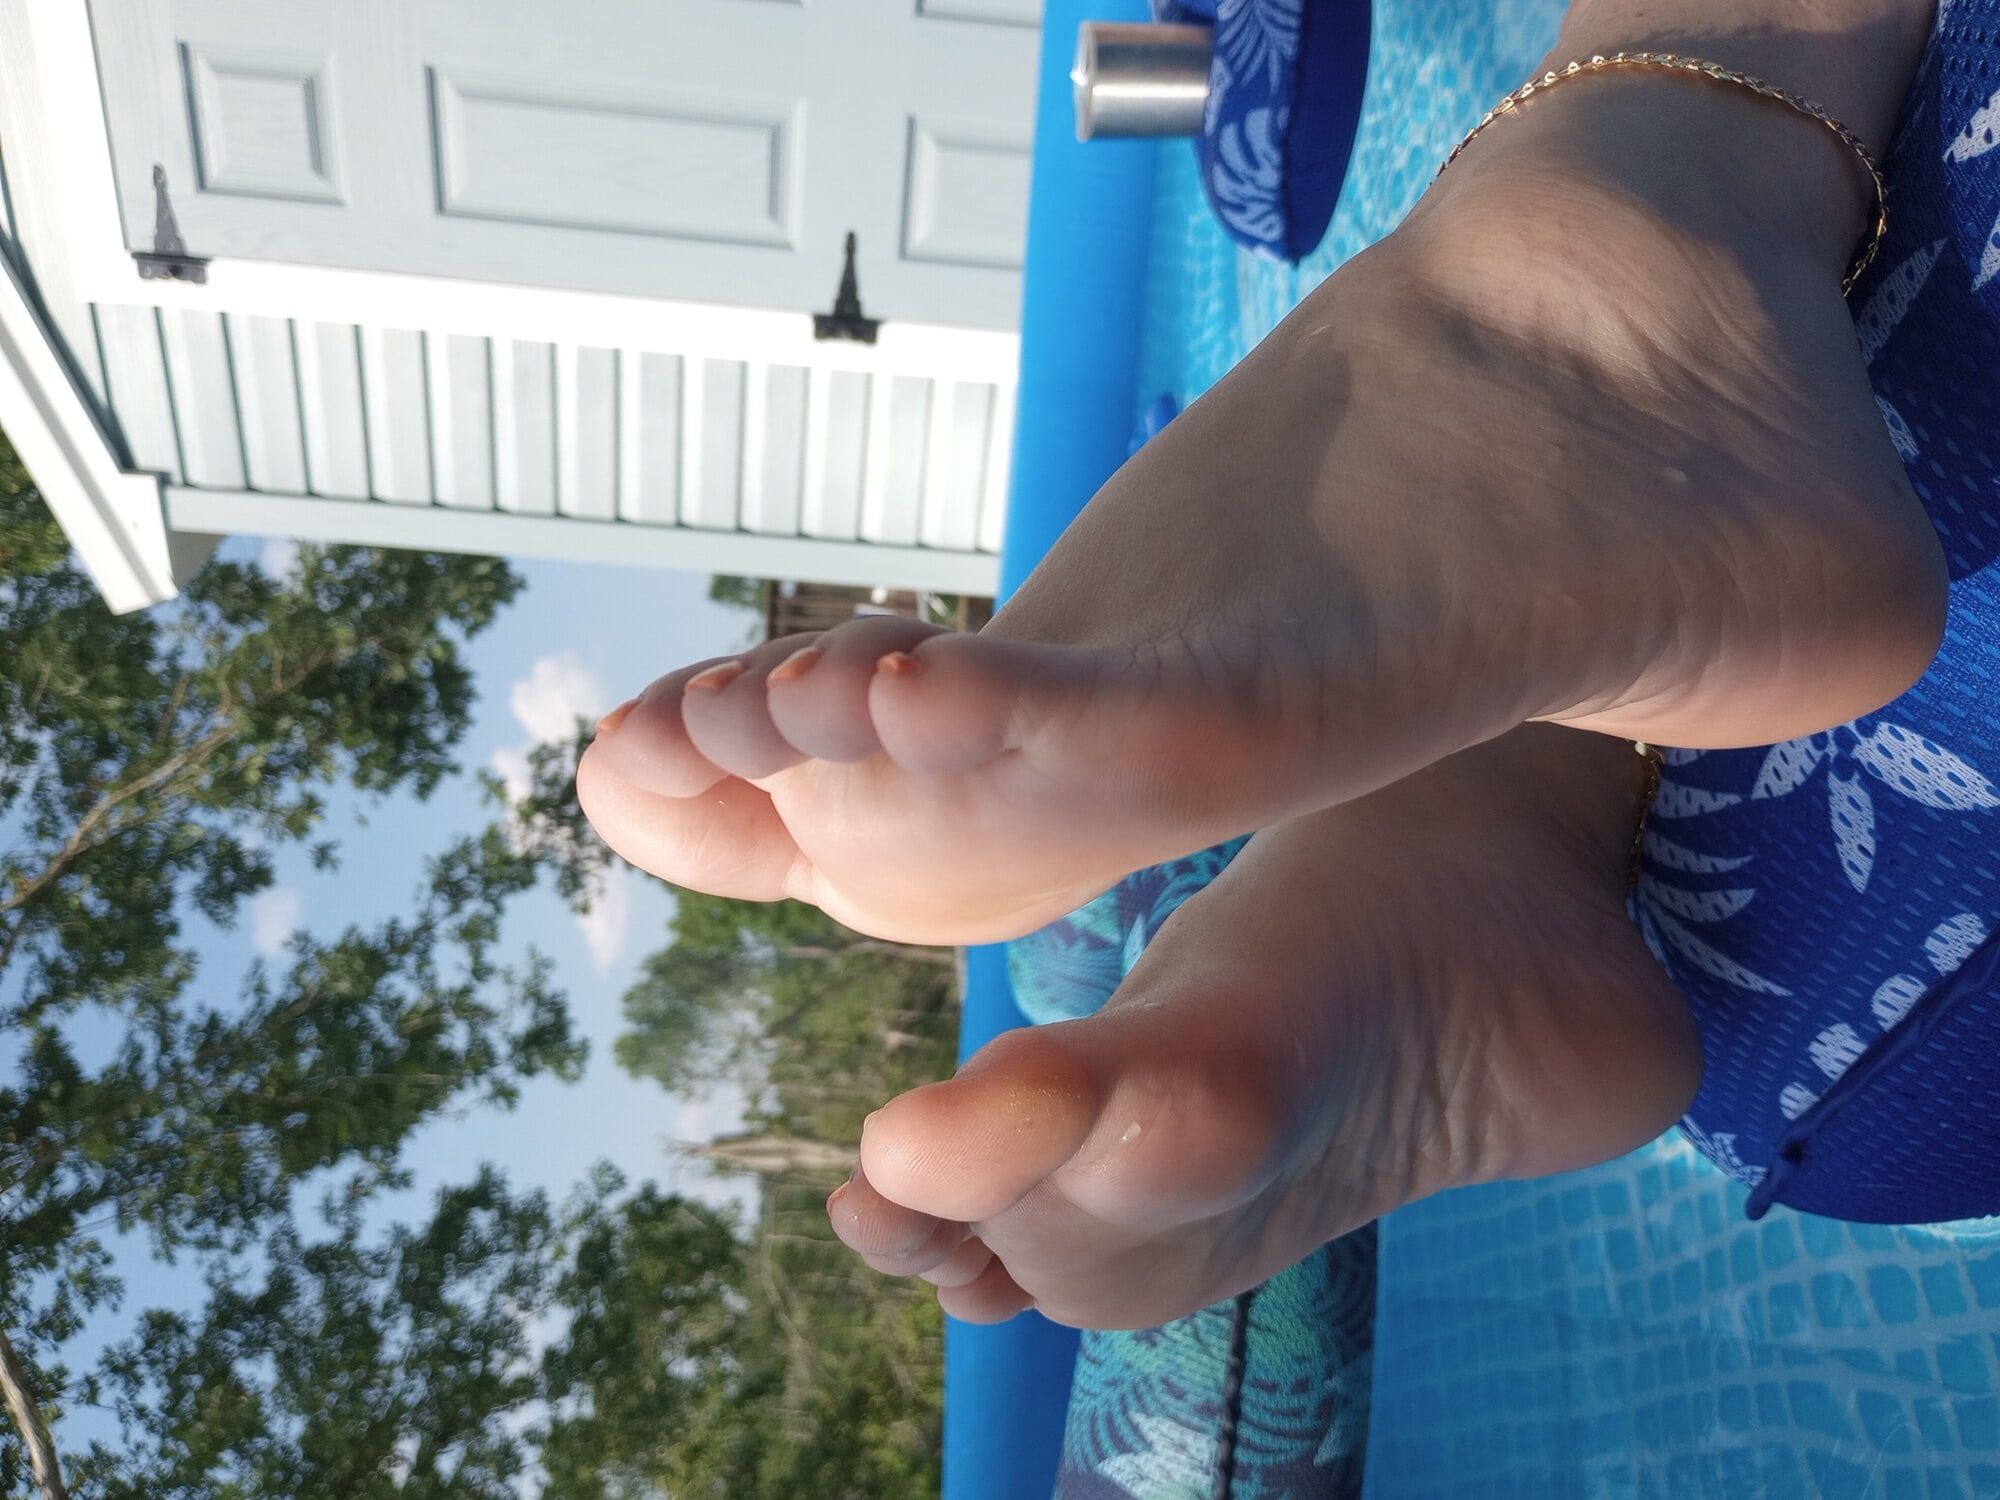 Girlfriends Feet in the pool #6